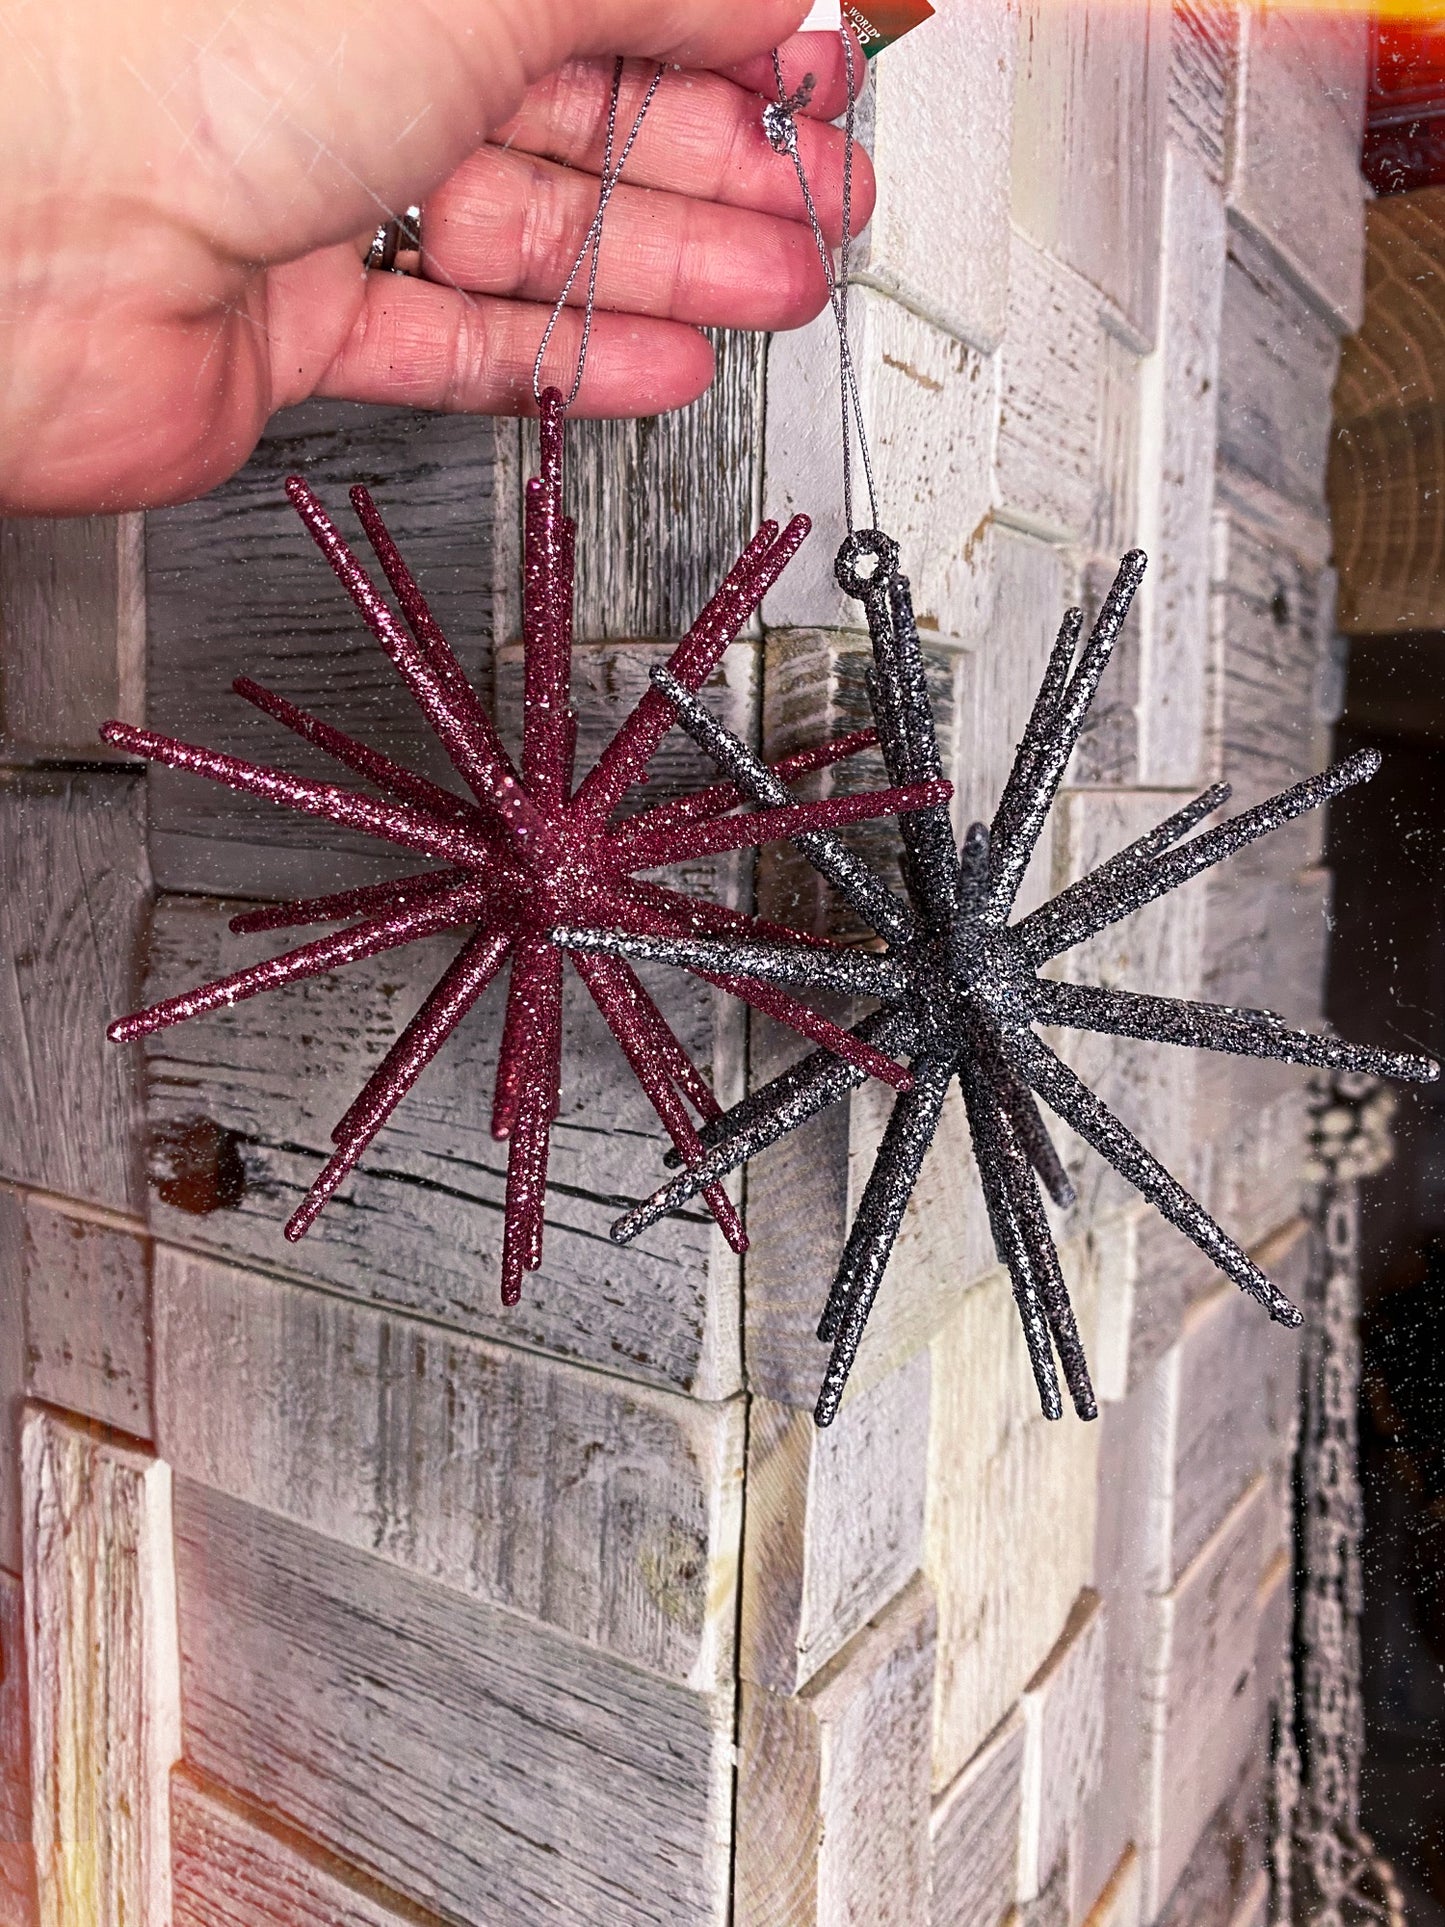 Starburst ornaments